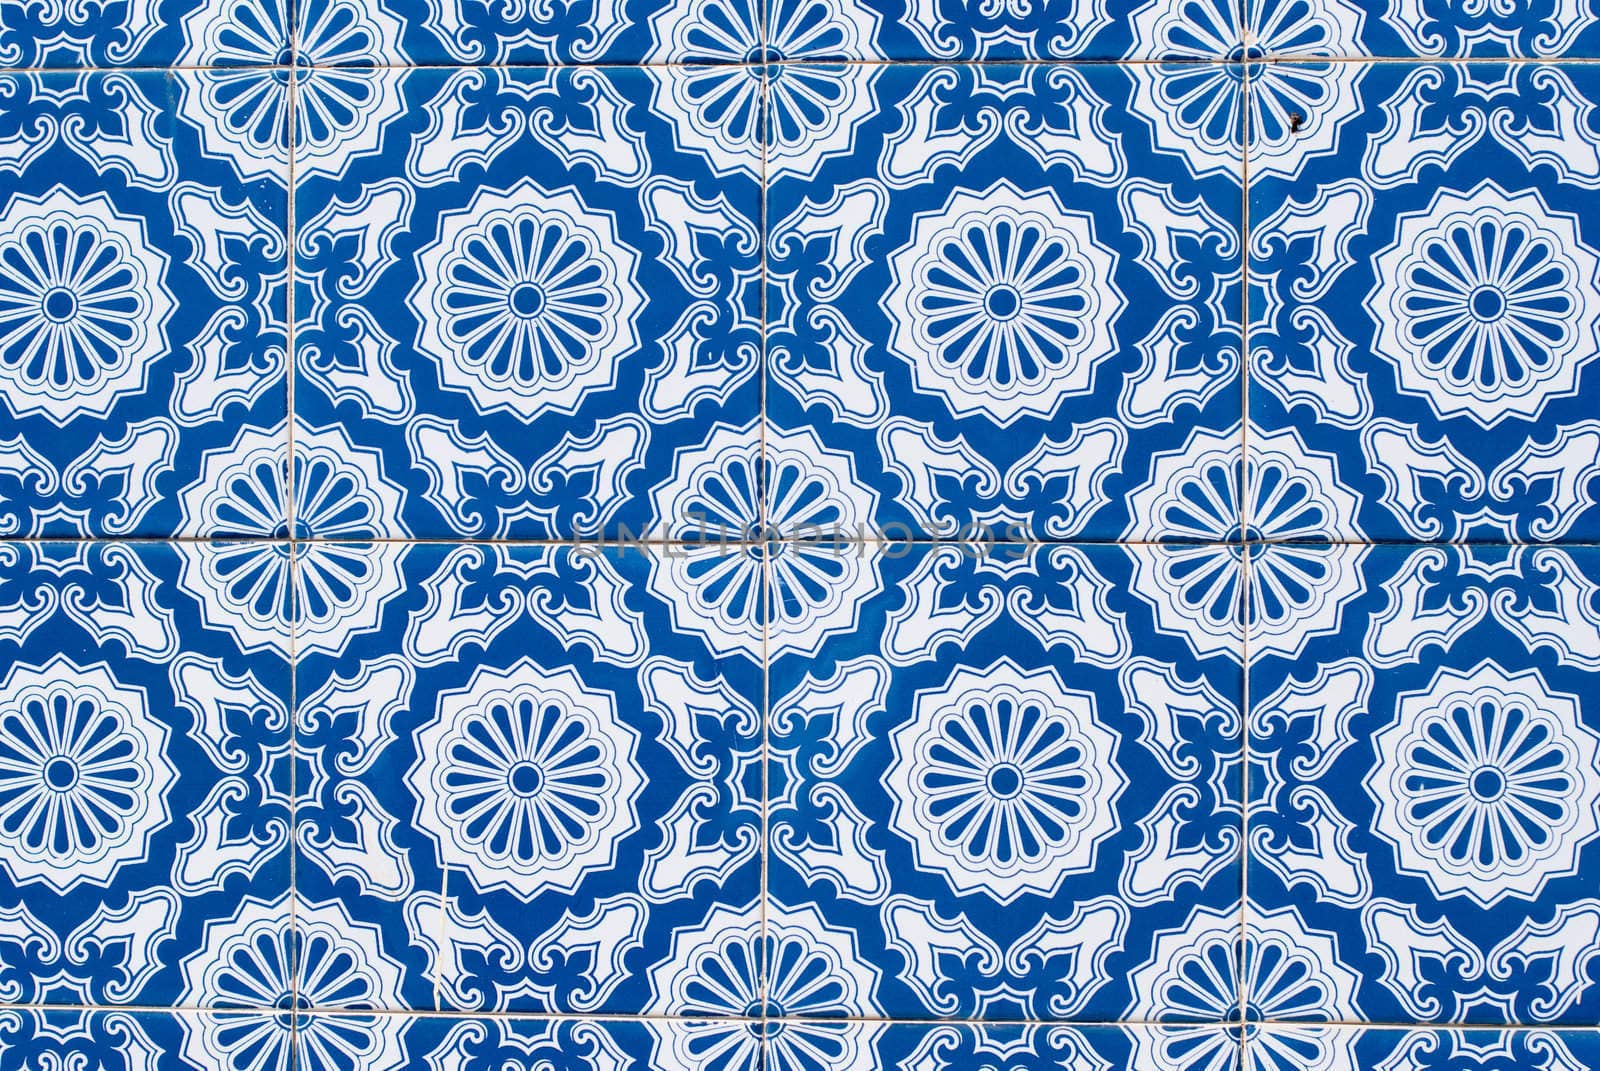 Portuguese glazed tiles 225 by homydesign